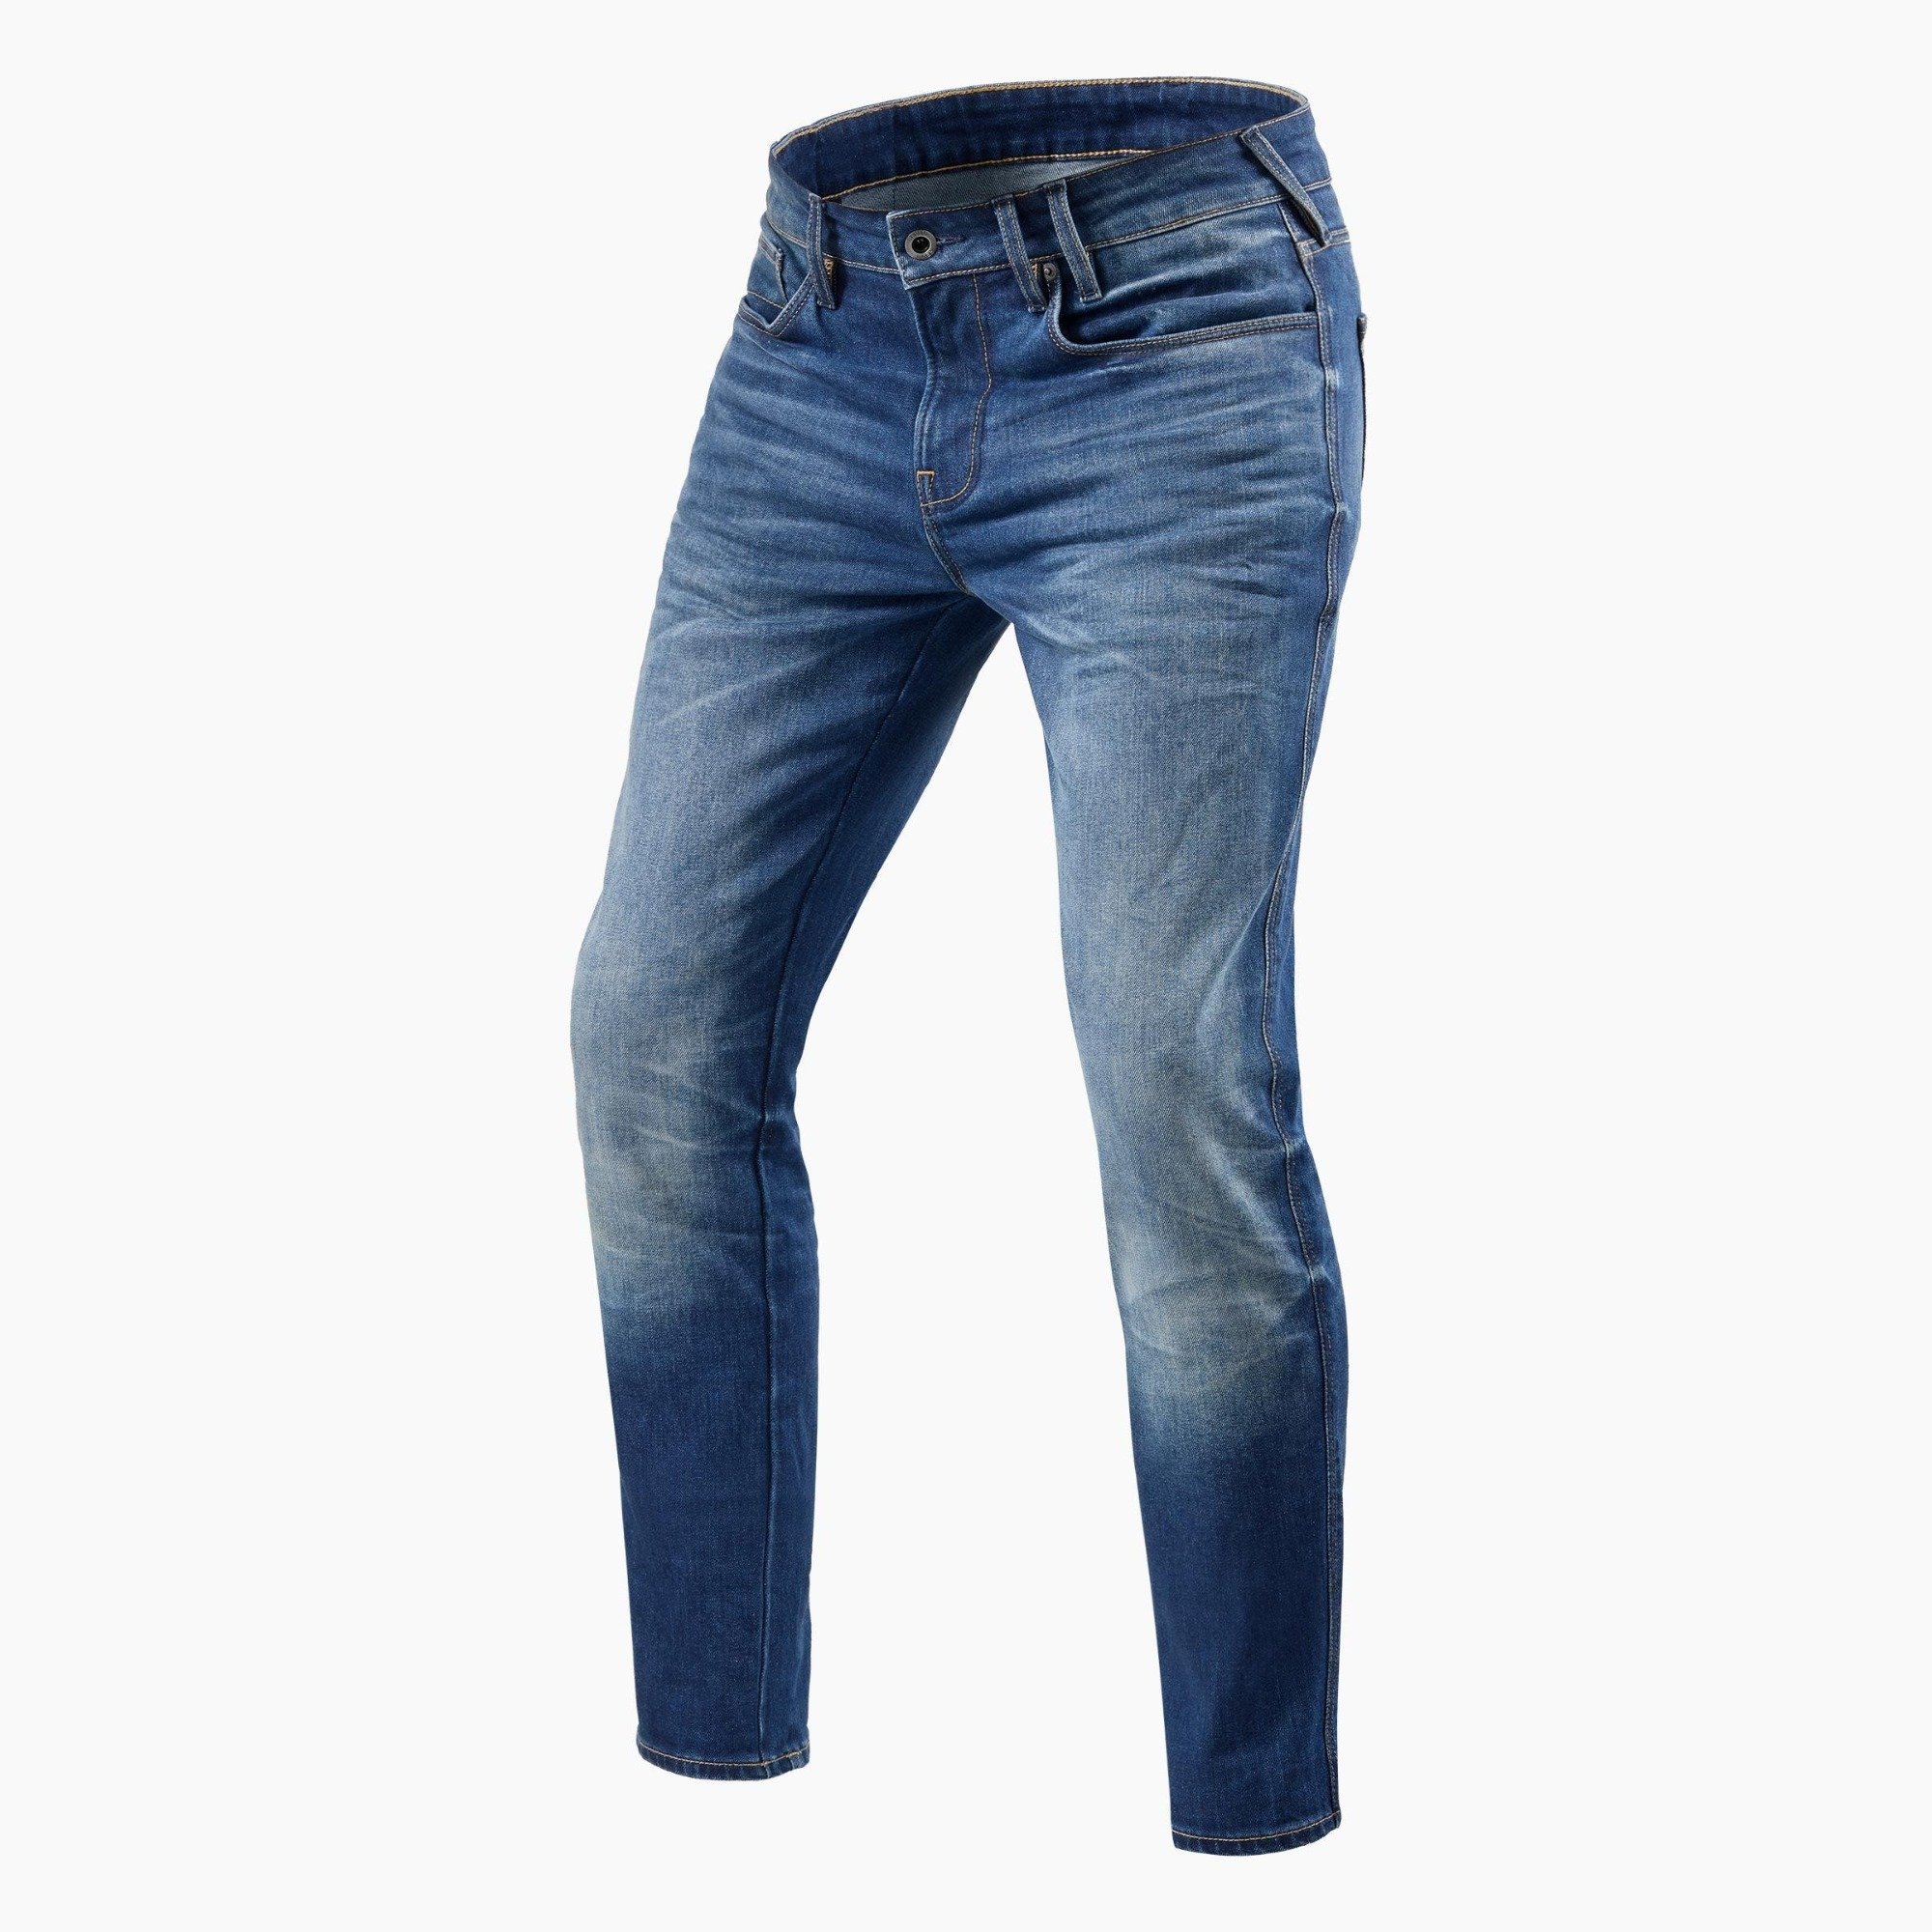 Image of REV'IT! Jeans Carlin SK Mid Blue Used Motorcycle Jeans Size L36/W38 EN